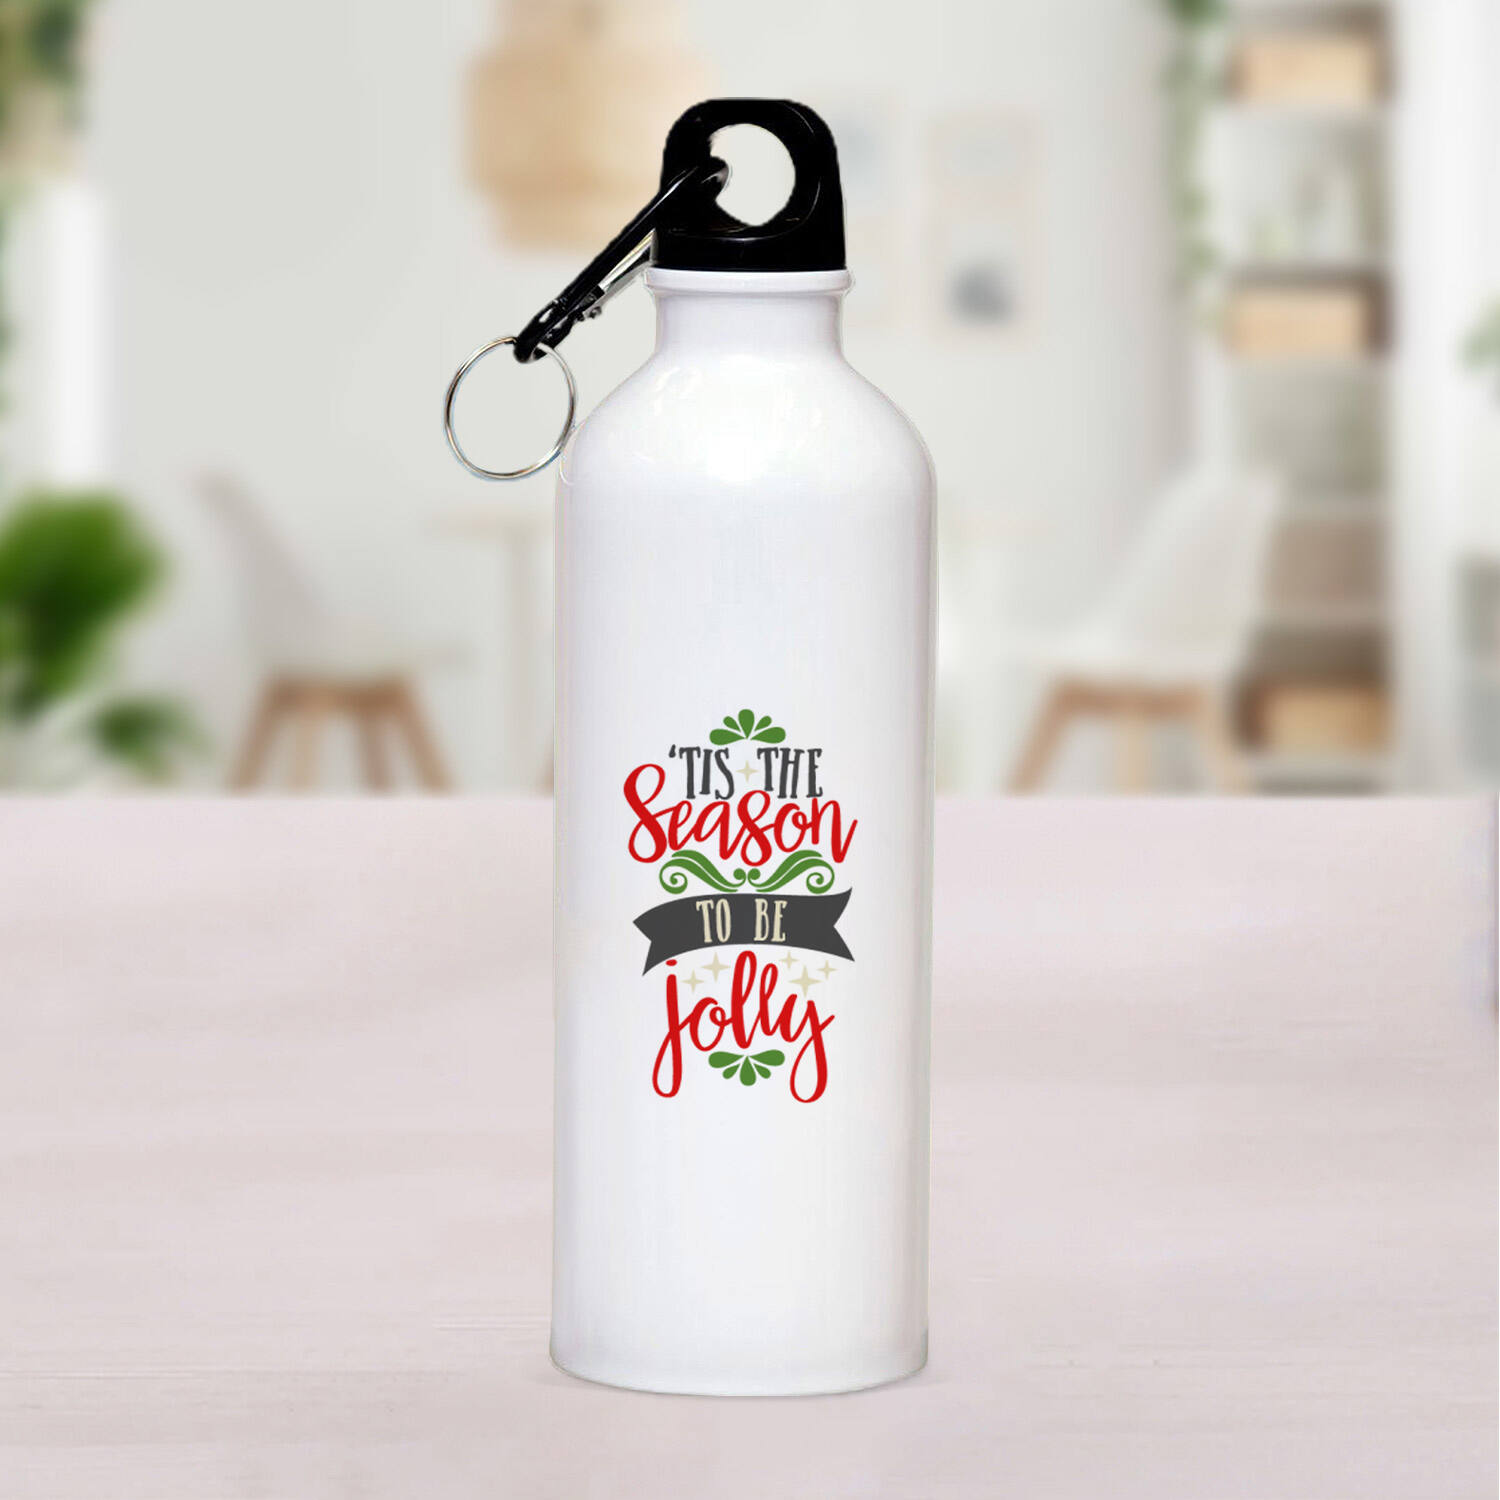 Send Personalized Metal Water Bottle Gift Online, Rs.450 | FlowerAura